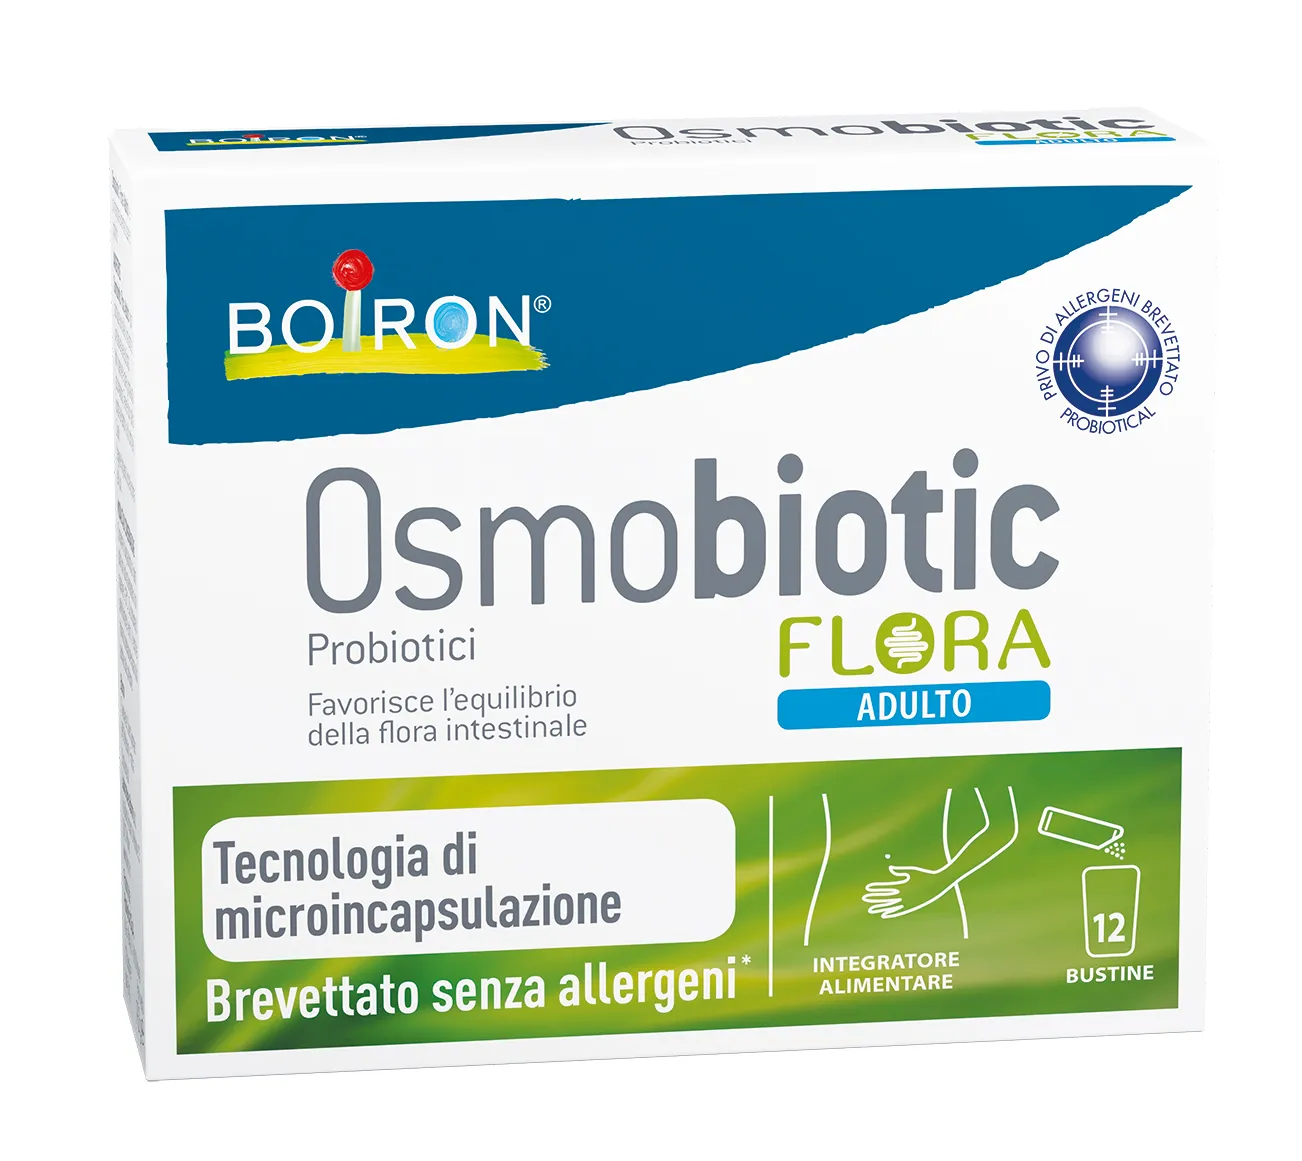 Boiron Osmobiotic Flora Adulto Integratore Probiotico 12 Bustine Benessere Intestinale